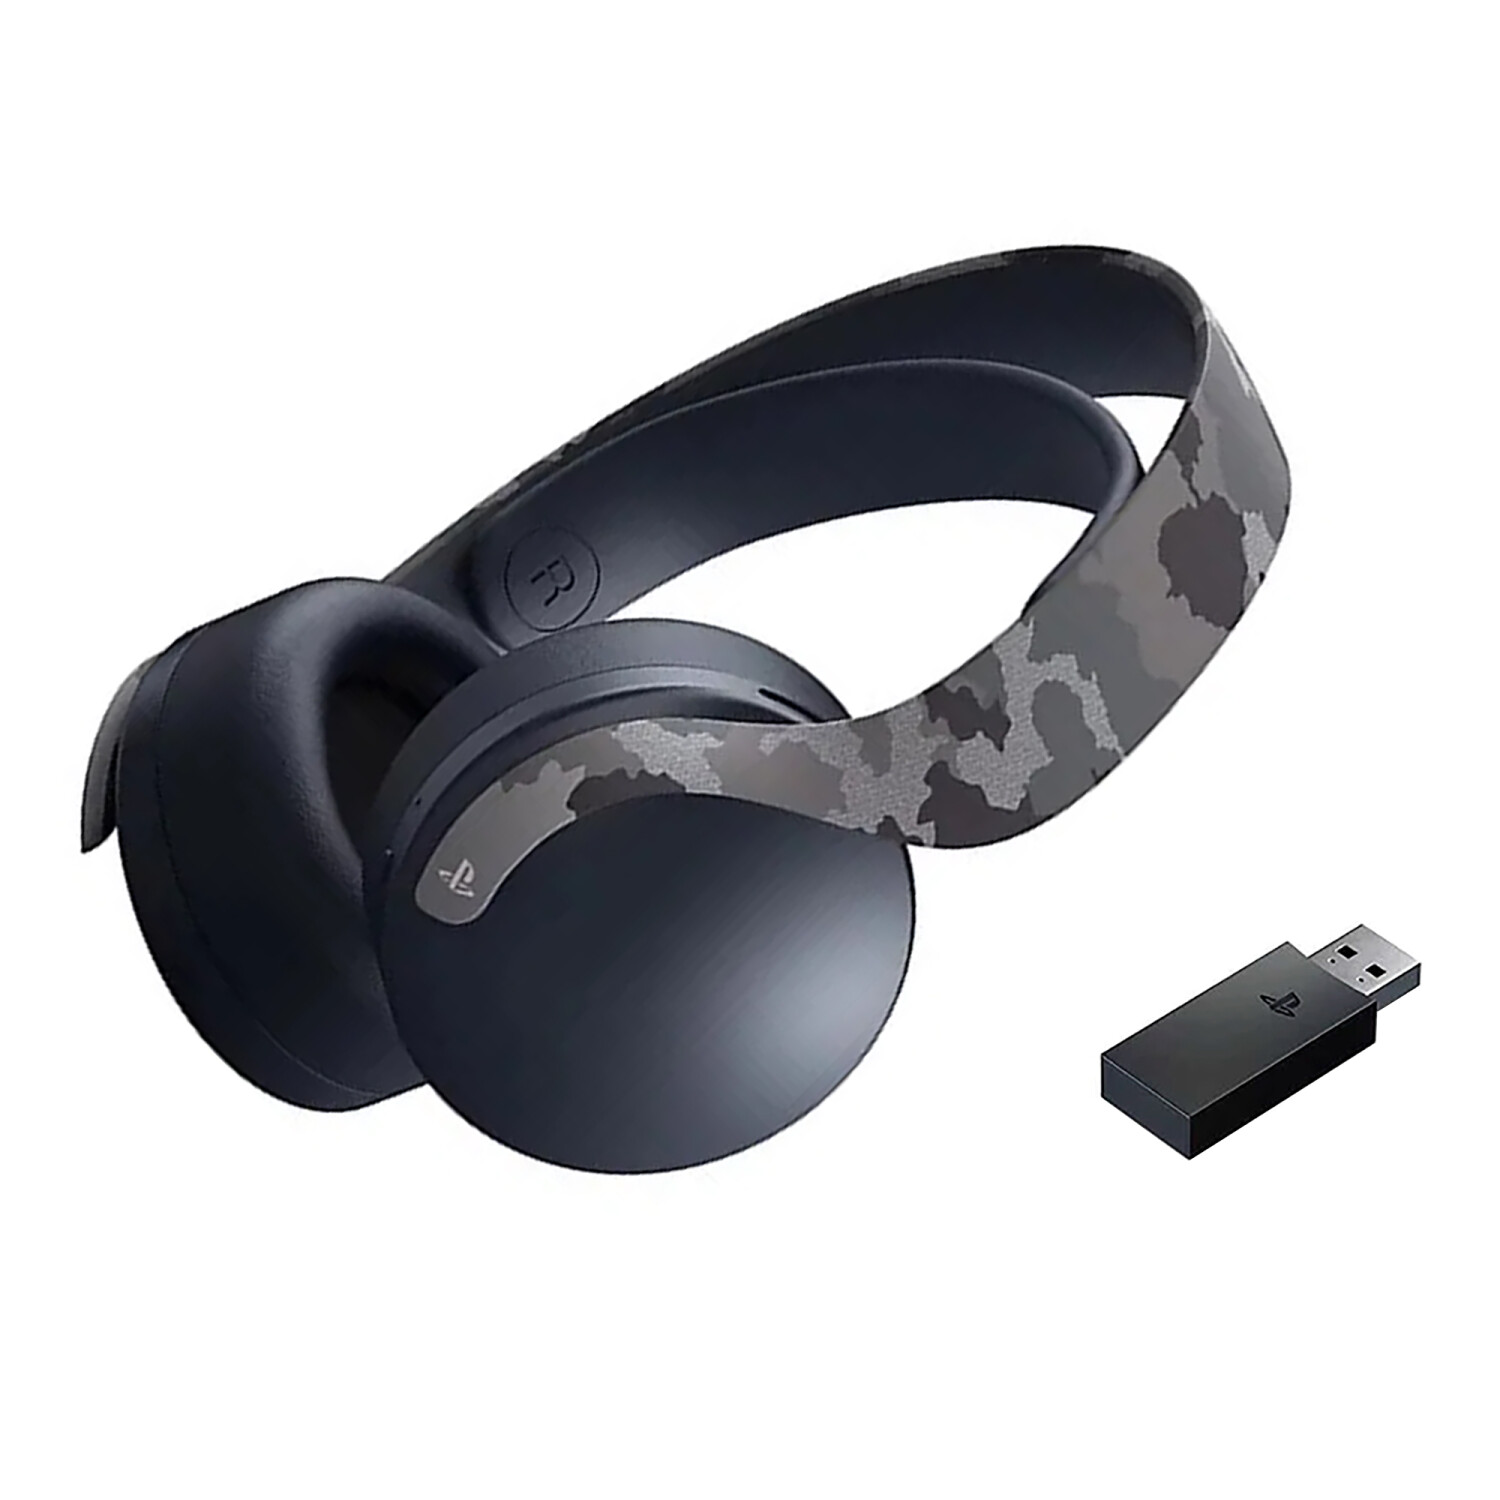 Sony - Auriculares Inalámbricos para PS5 / PS4 Pulse 3D - Audio 3D